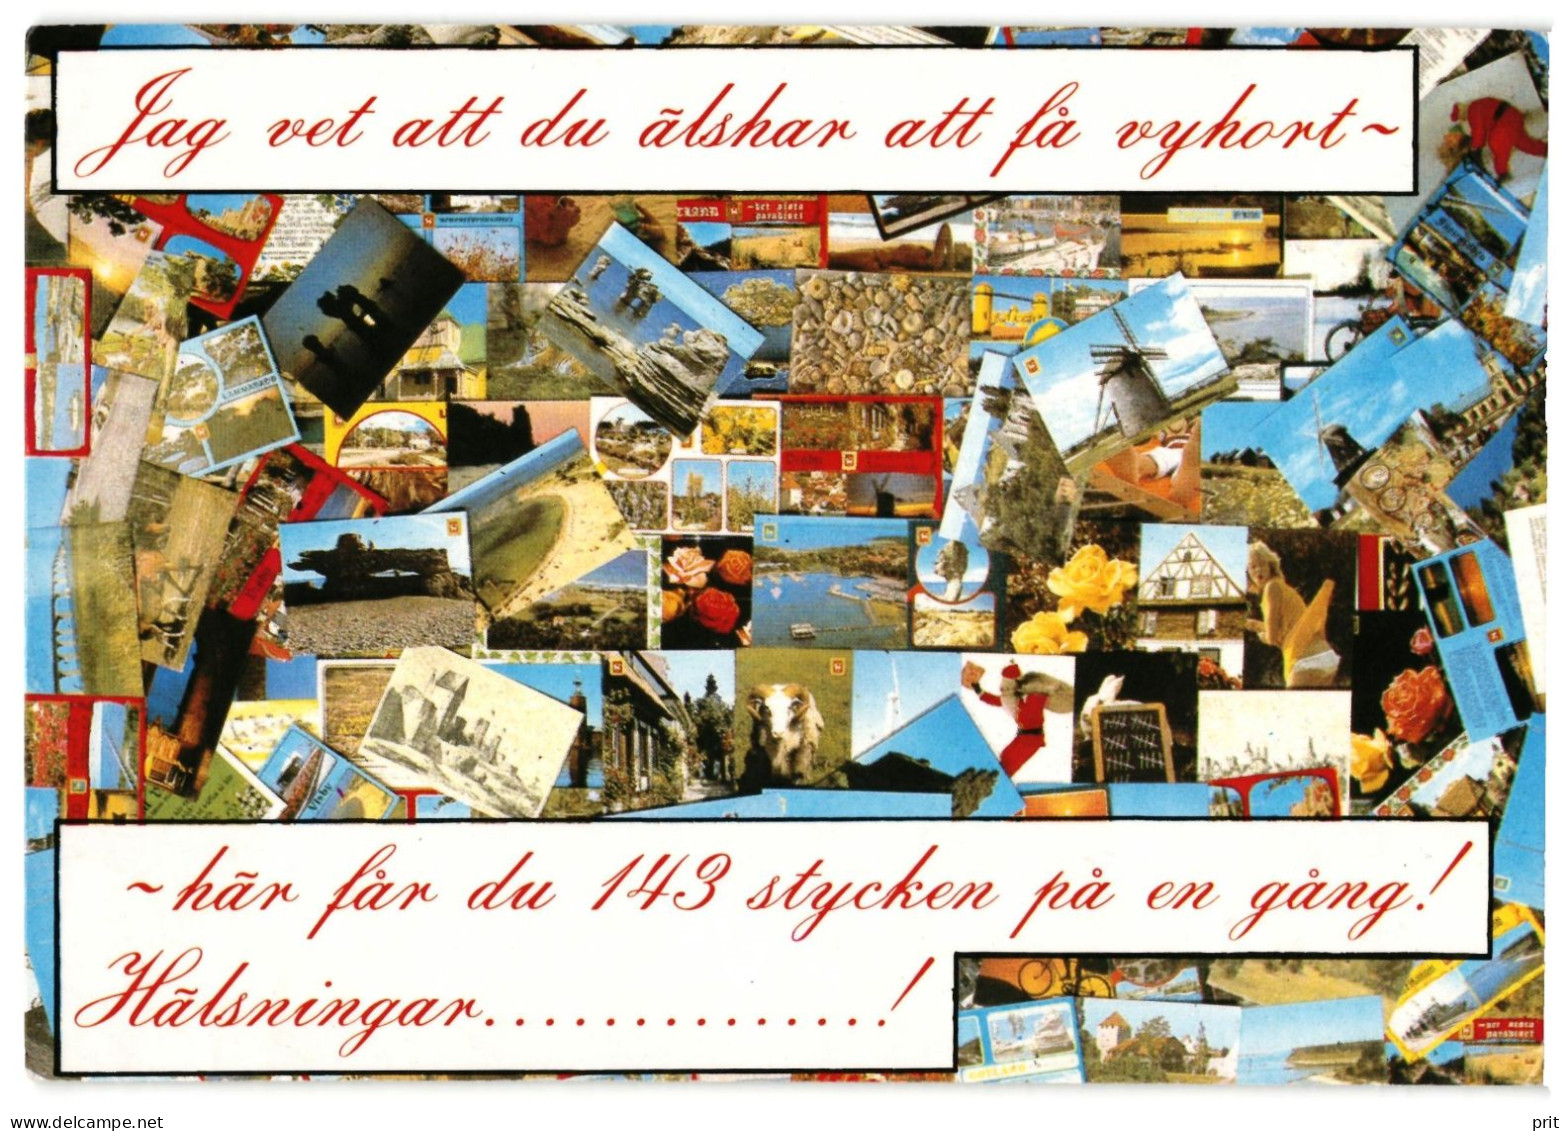 143 Postcard Collage On Postcard. Friendship Postcard. Publisher Hemlins Foto, Visby Gotland Sweden - Colecciones Y Lotes